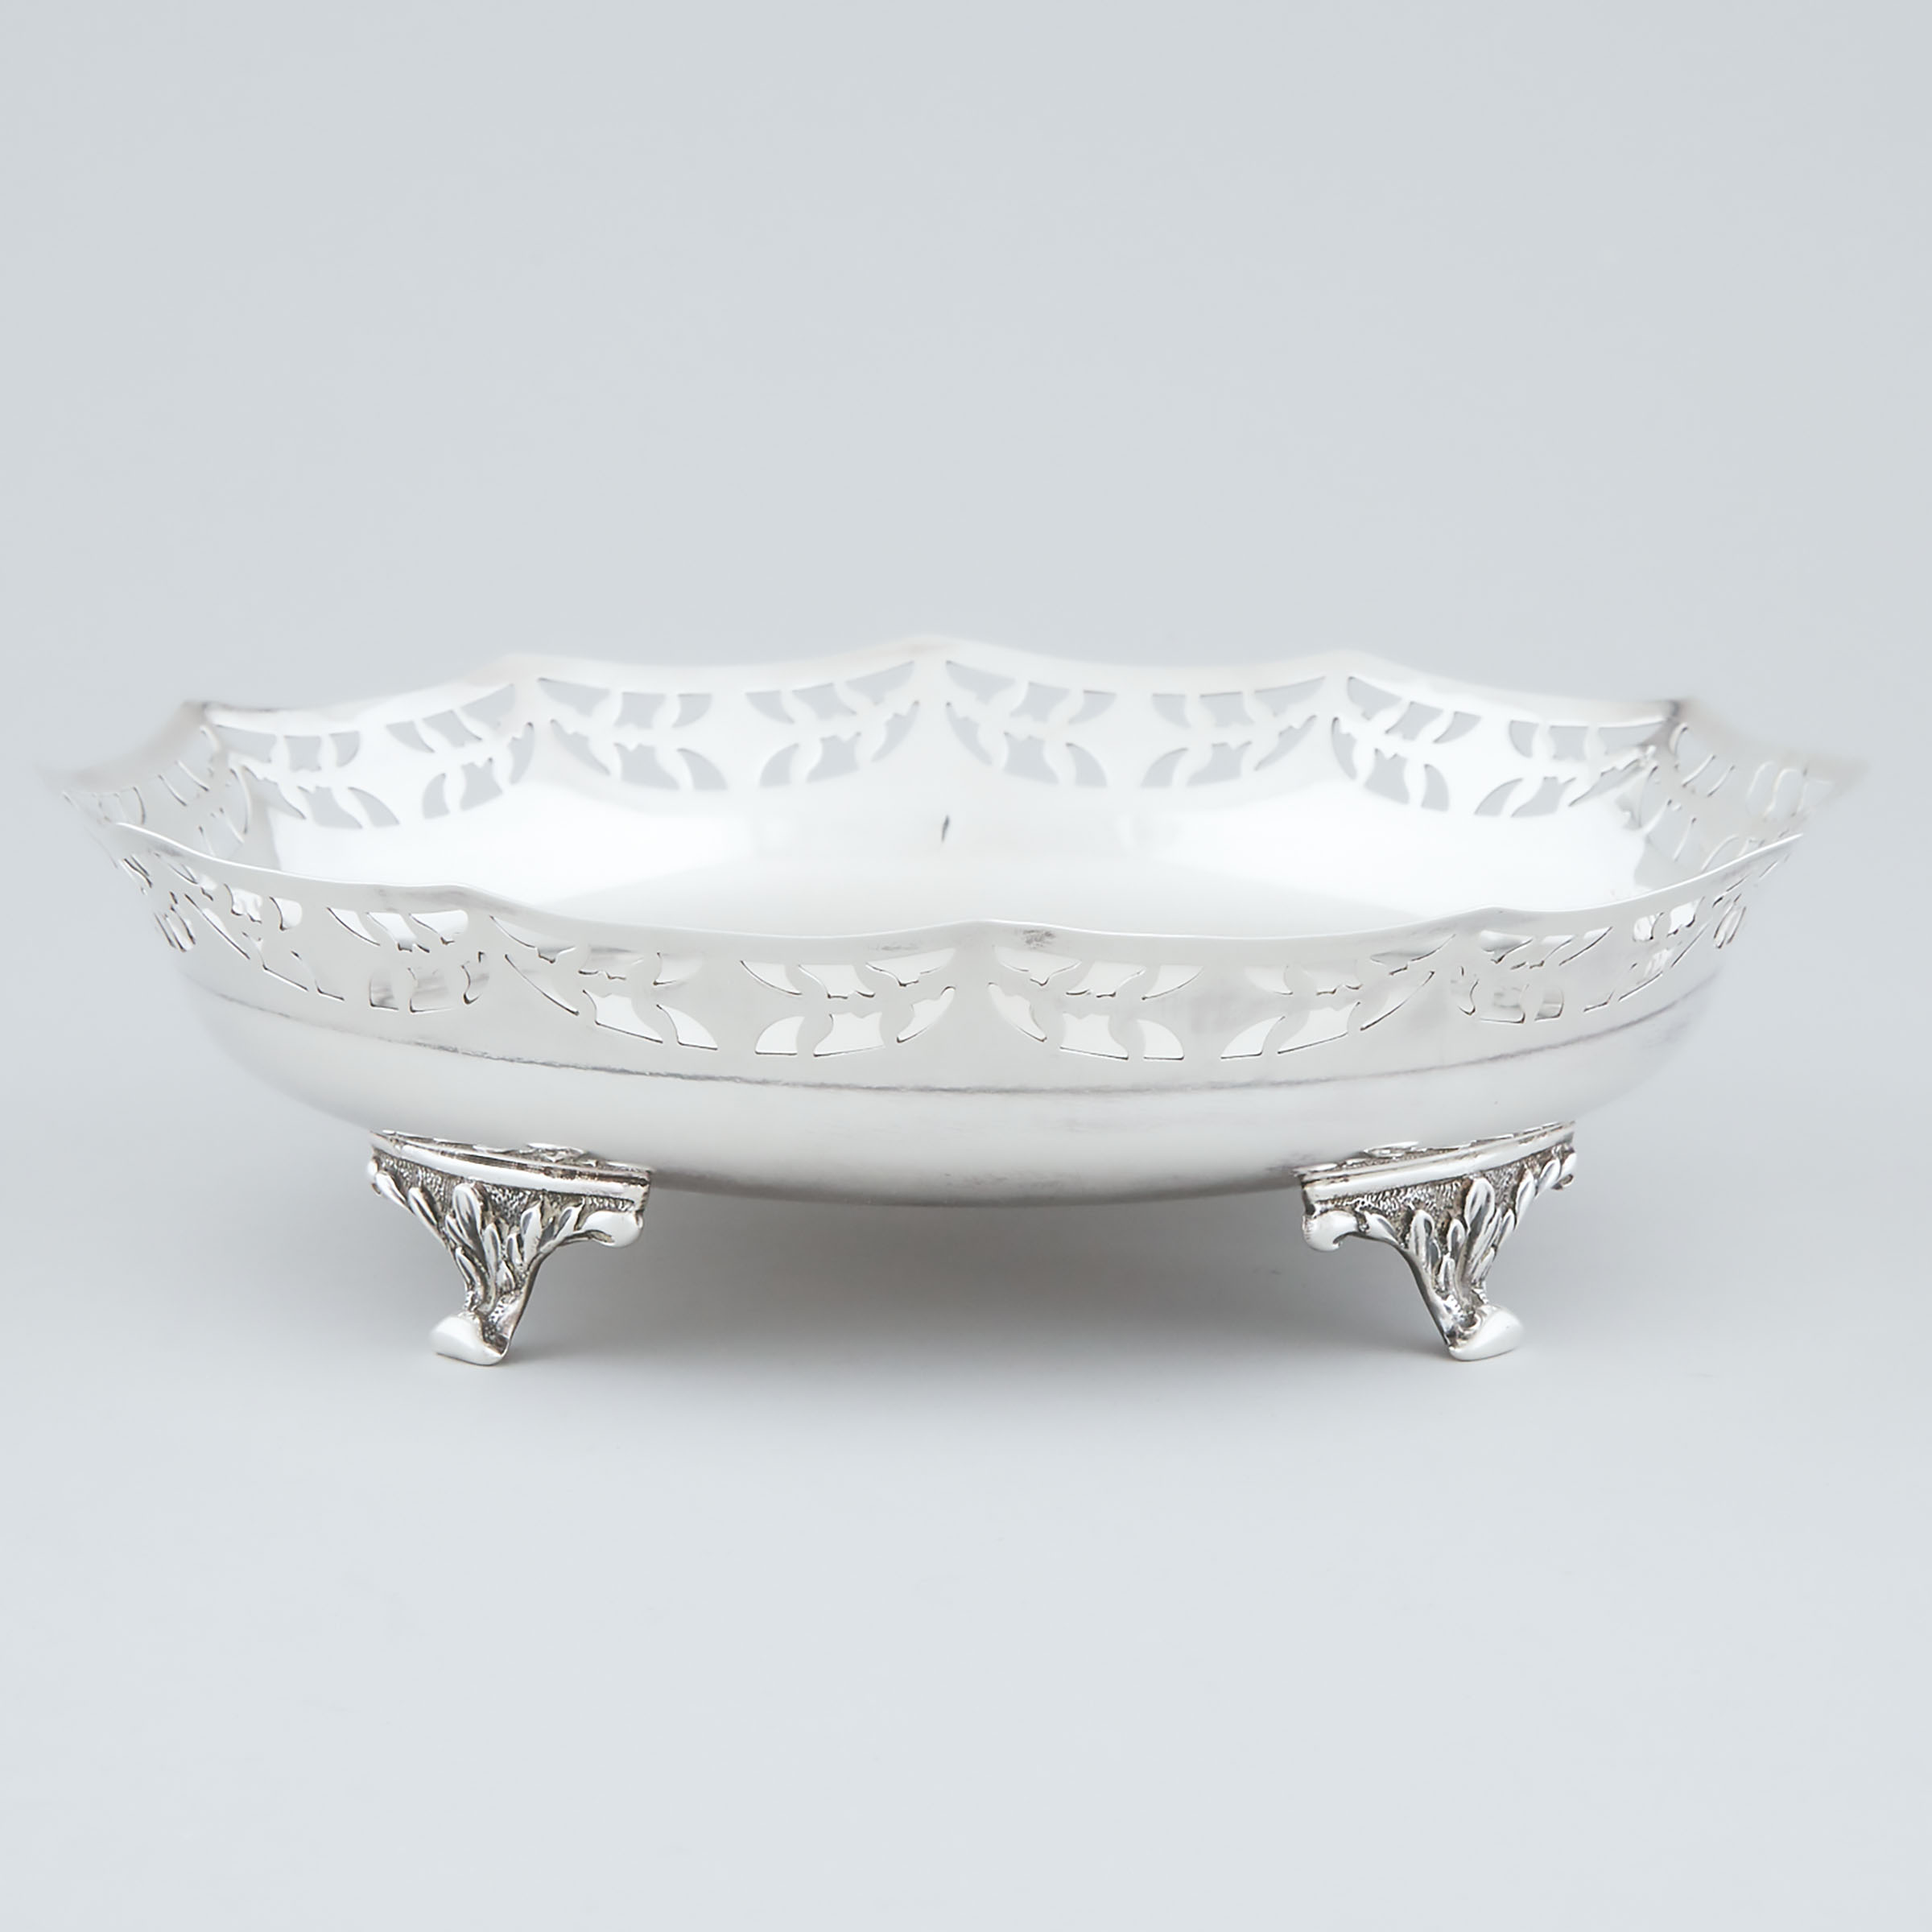 English Silver Pierced Shallow Bowl, William Walter Cashmore, Birmingham, 1931